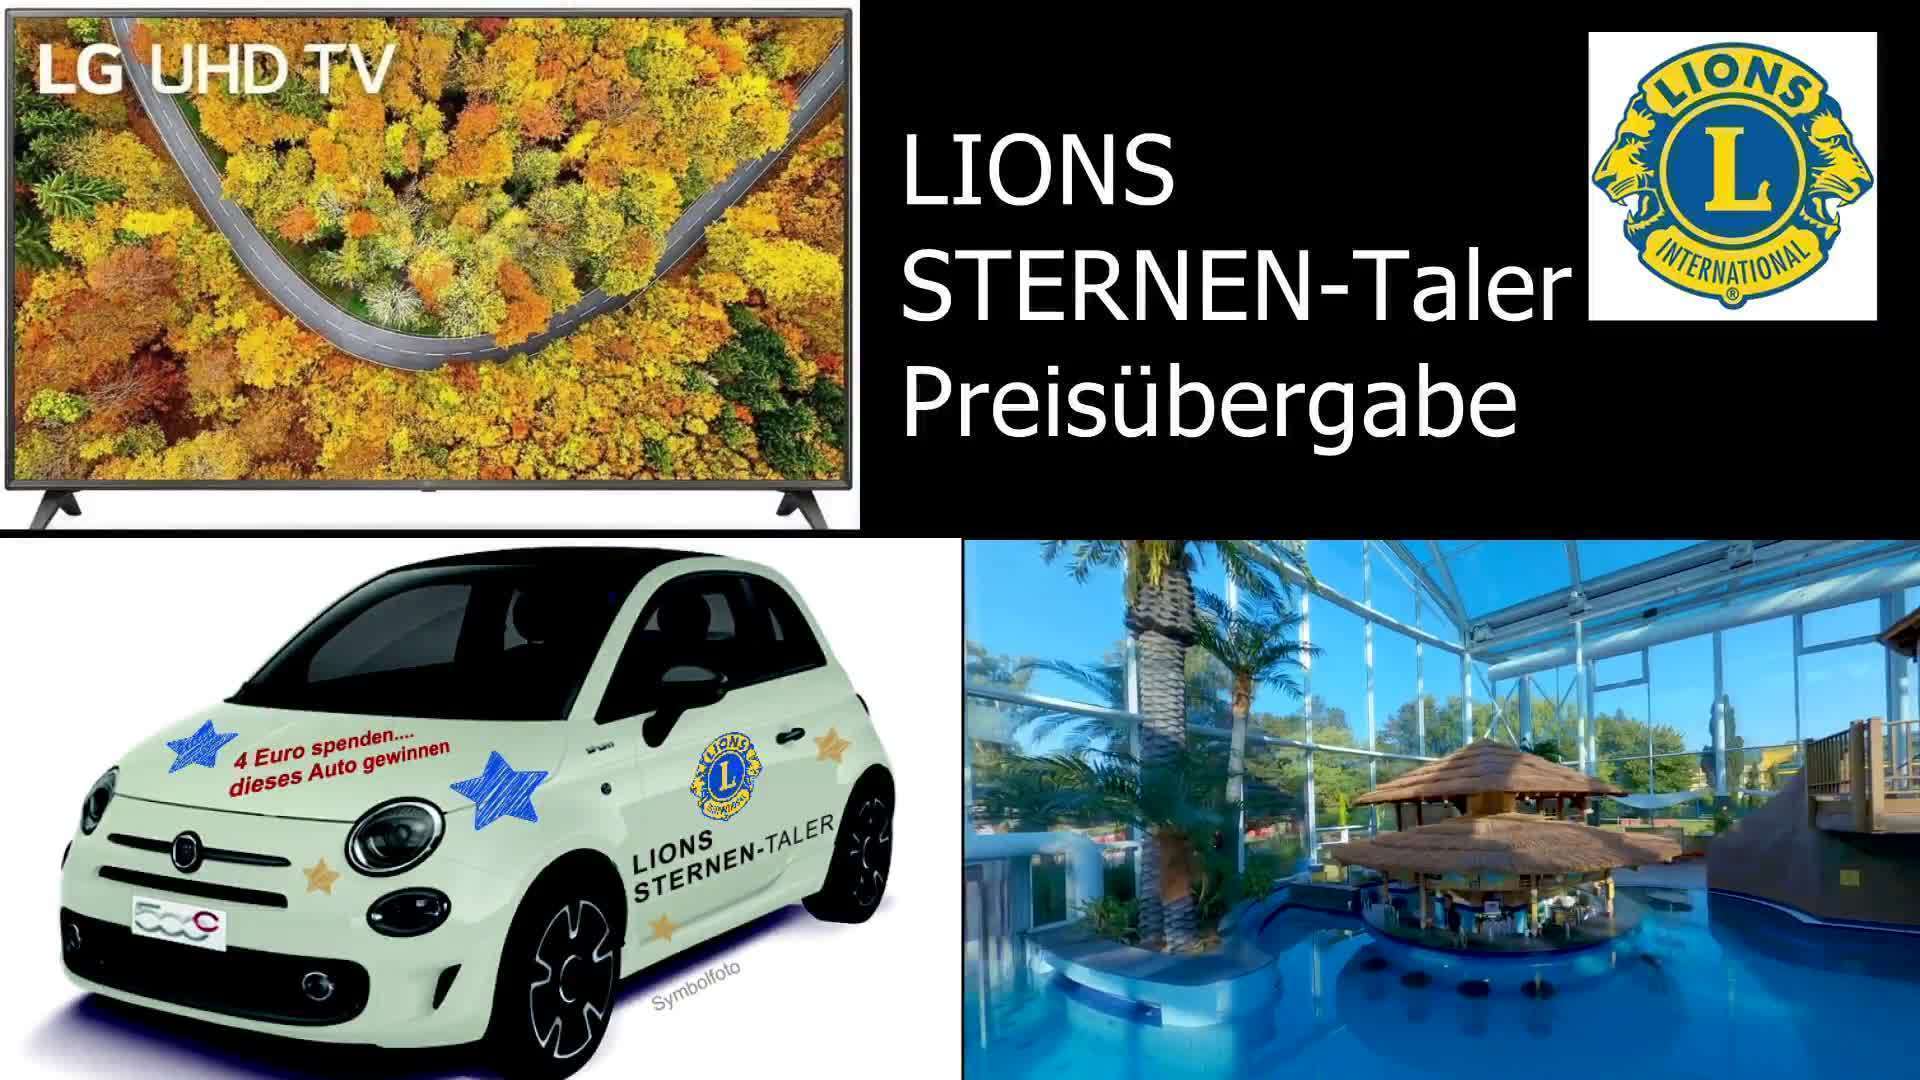 LIONS STERNEN-Taler Preisübergabe